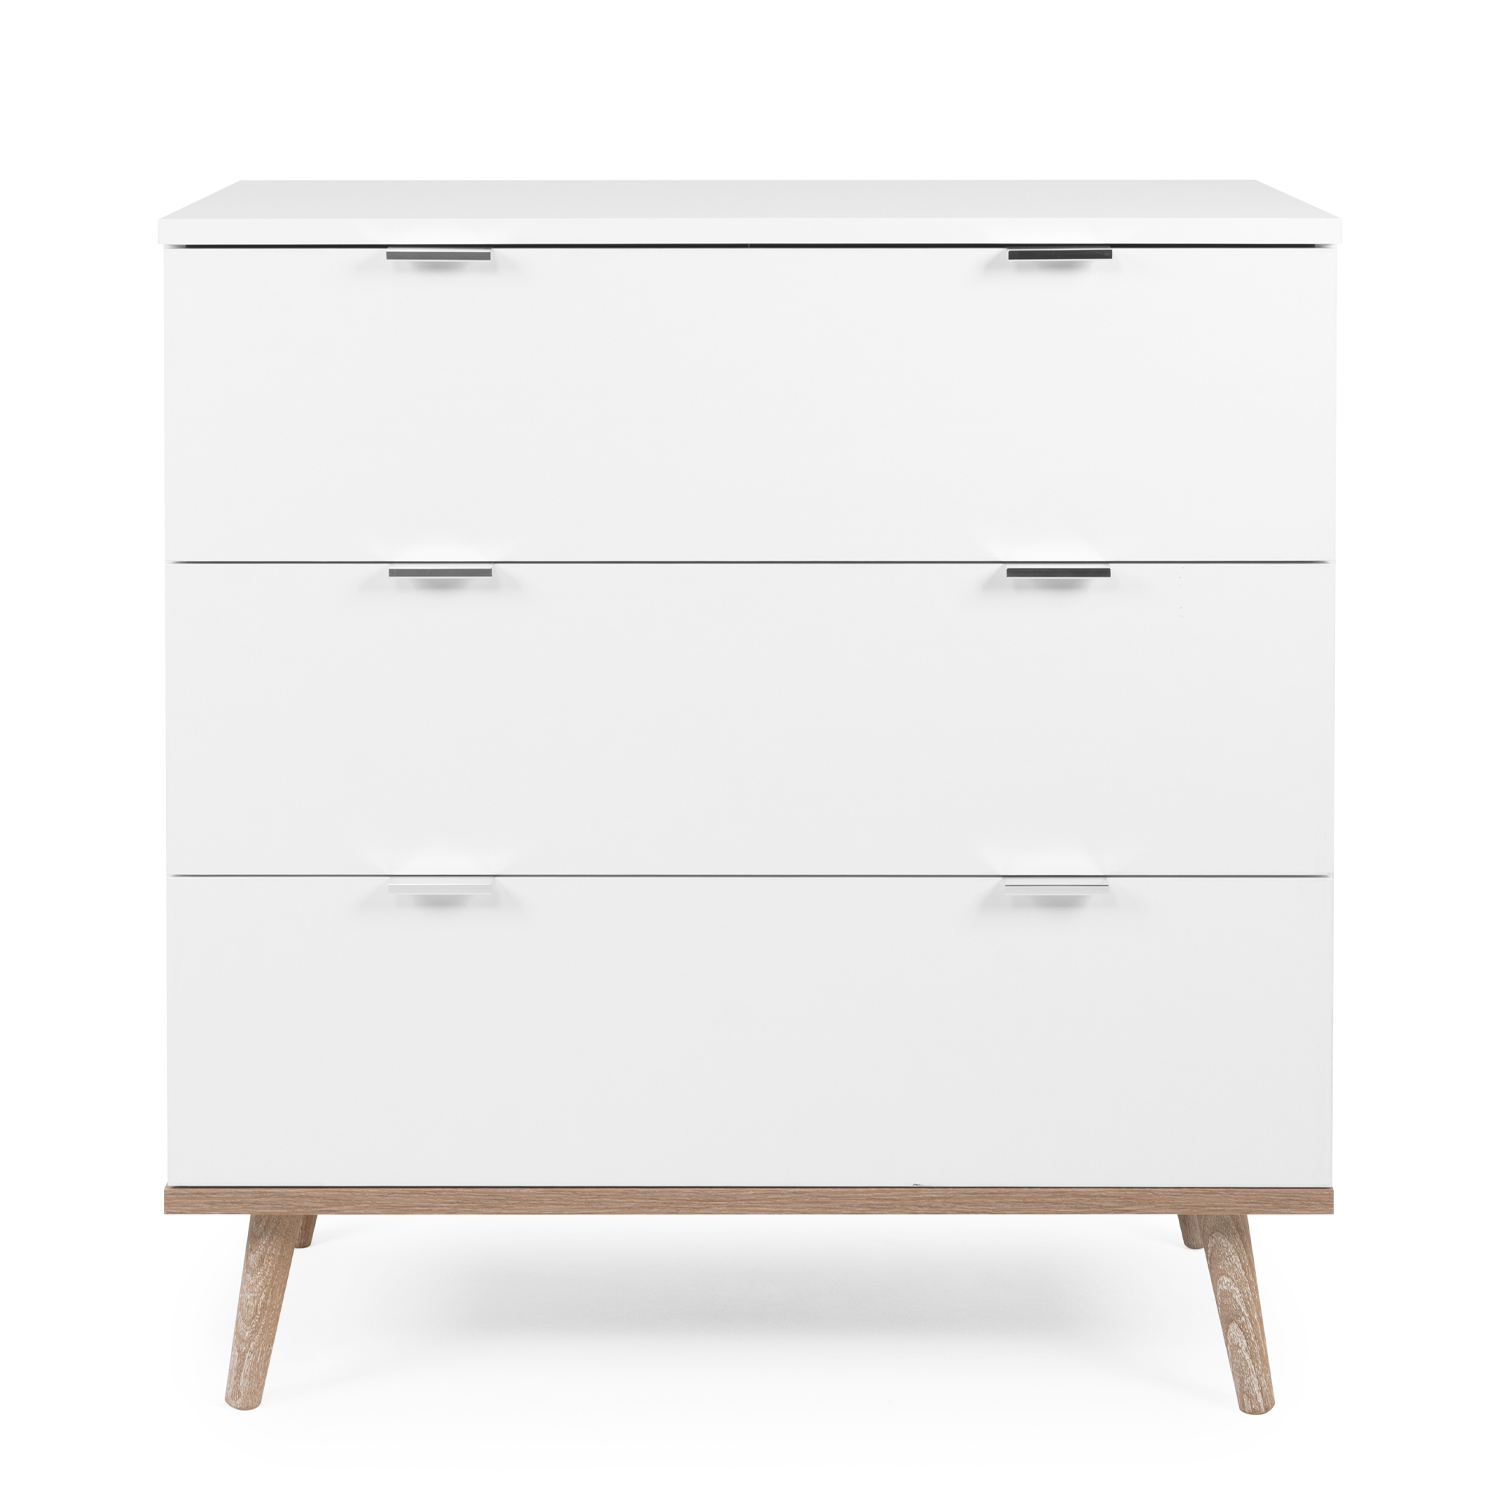 Dresser Sideboard White Wood with Drawers Bedroom Wardrobe